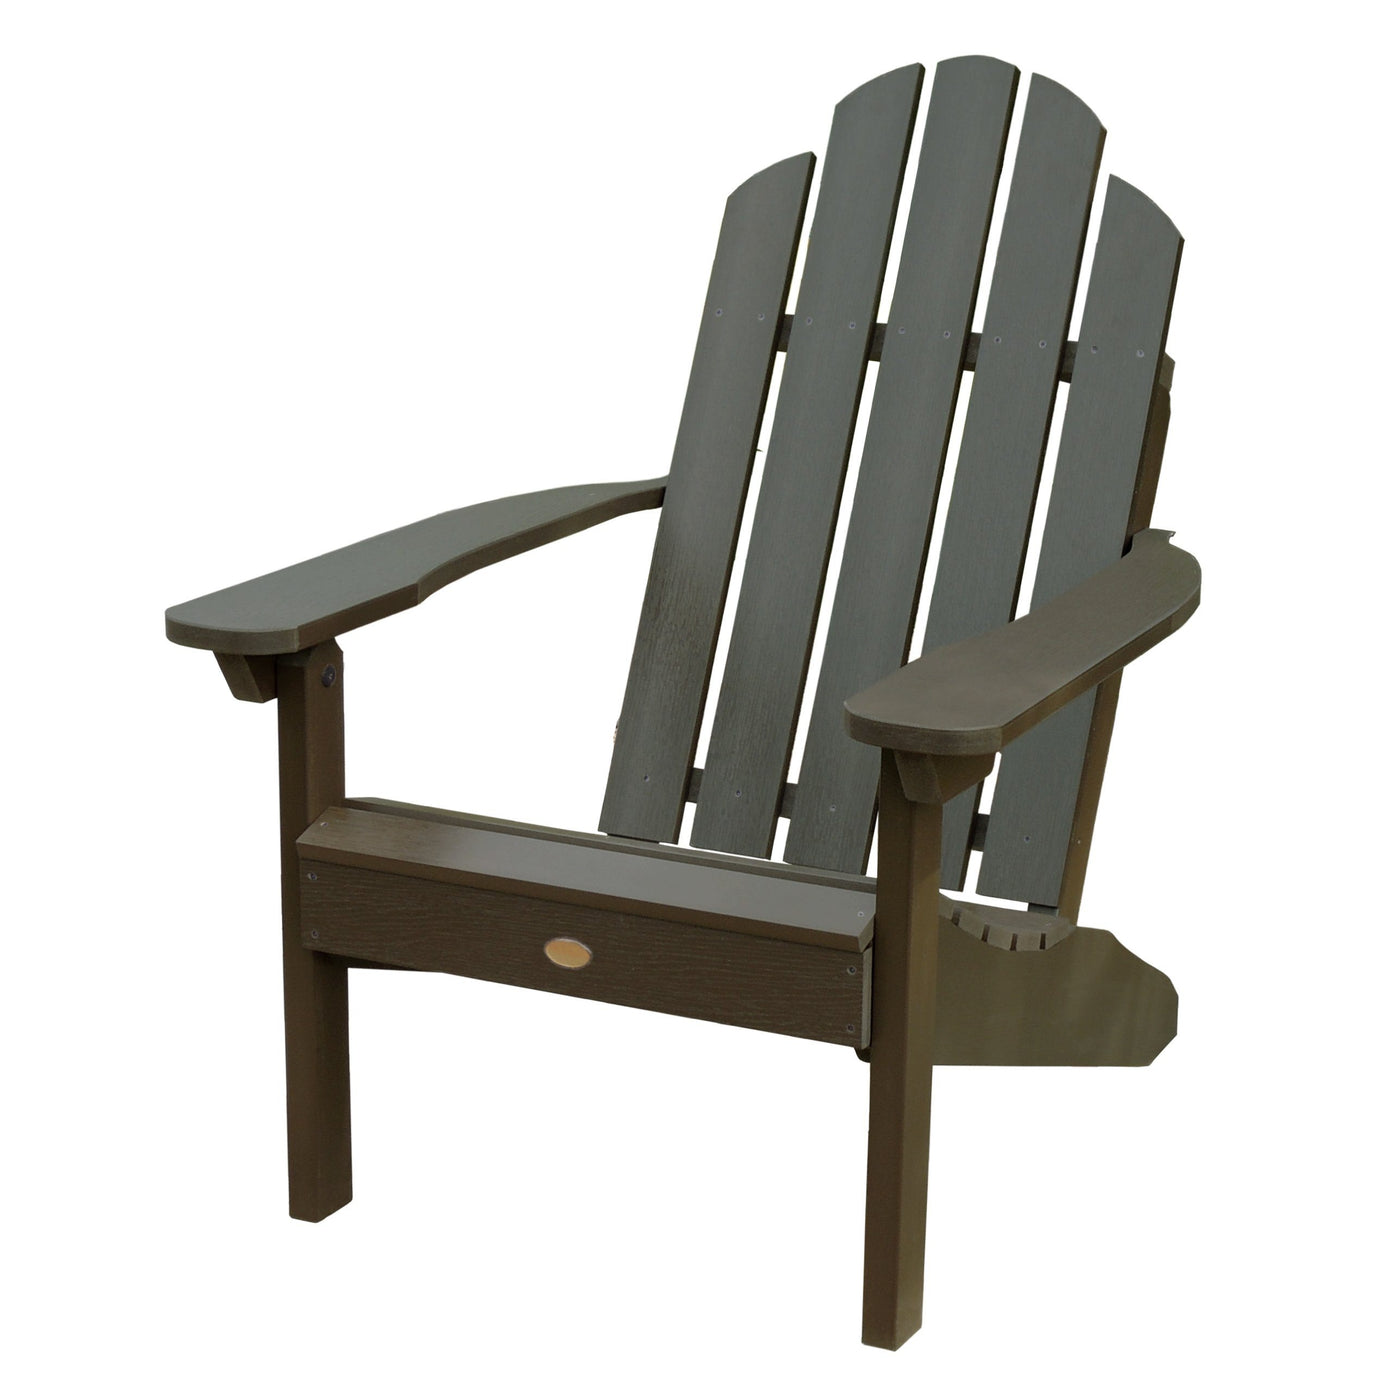 Refurbished Classic Westport Adirondack Chair Highwood USA 